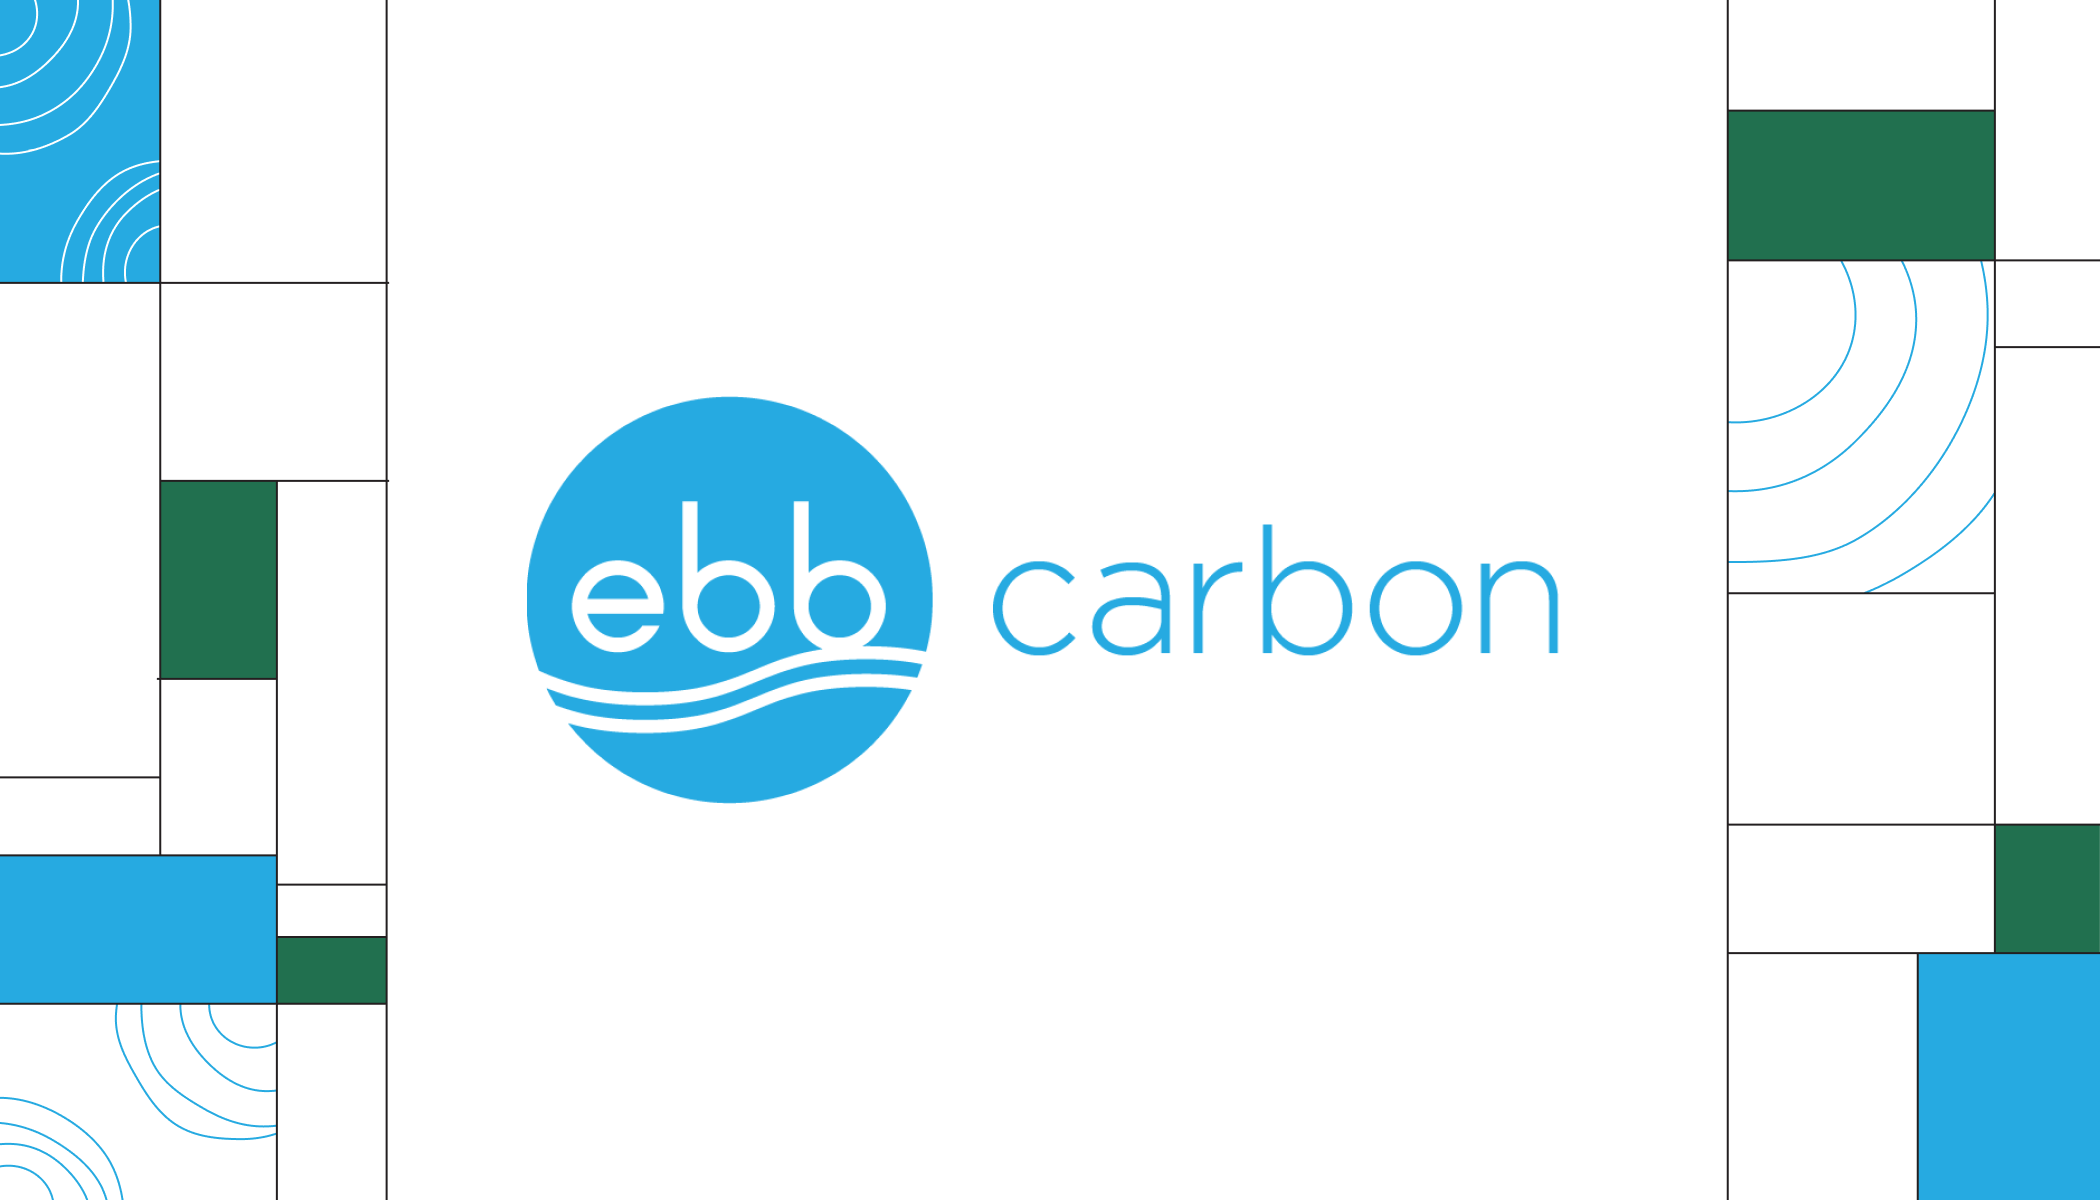 Ebb Carbon logo